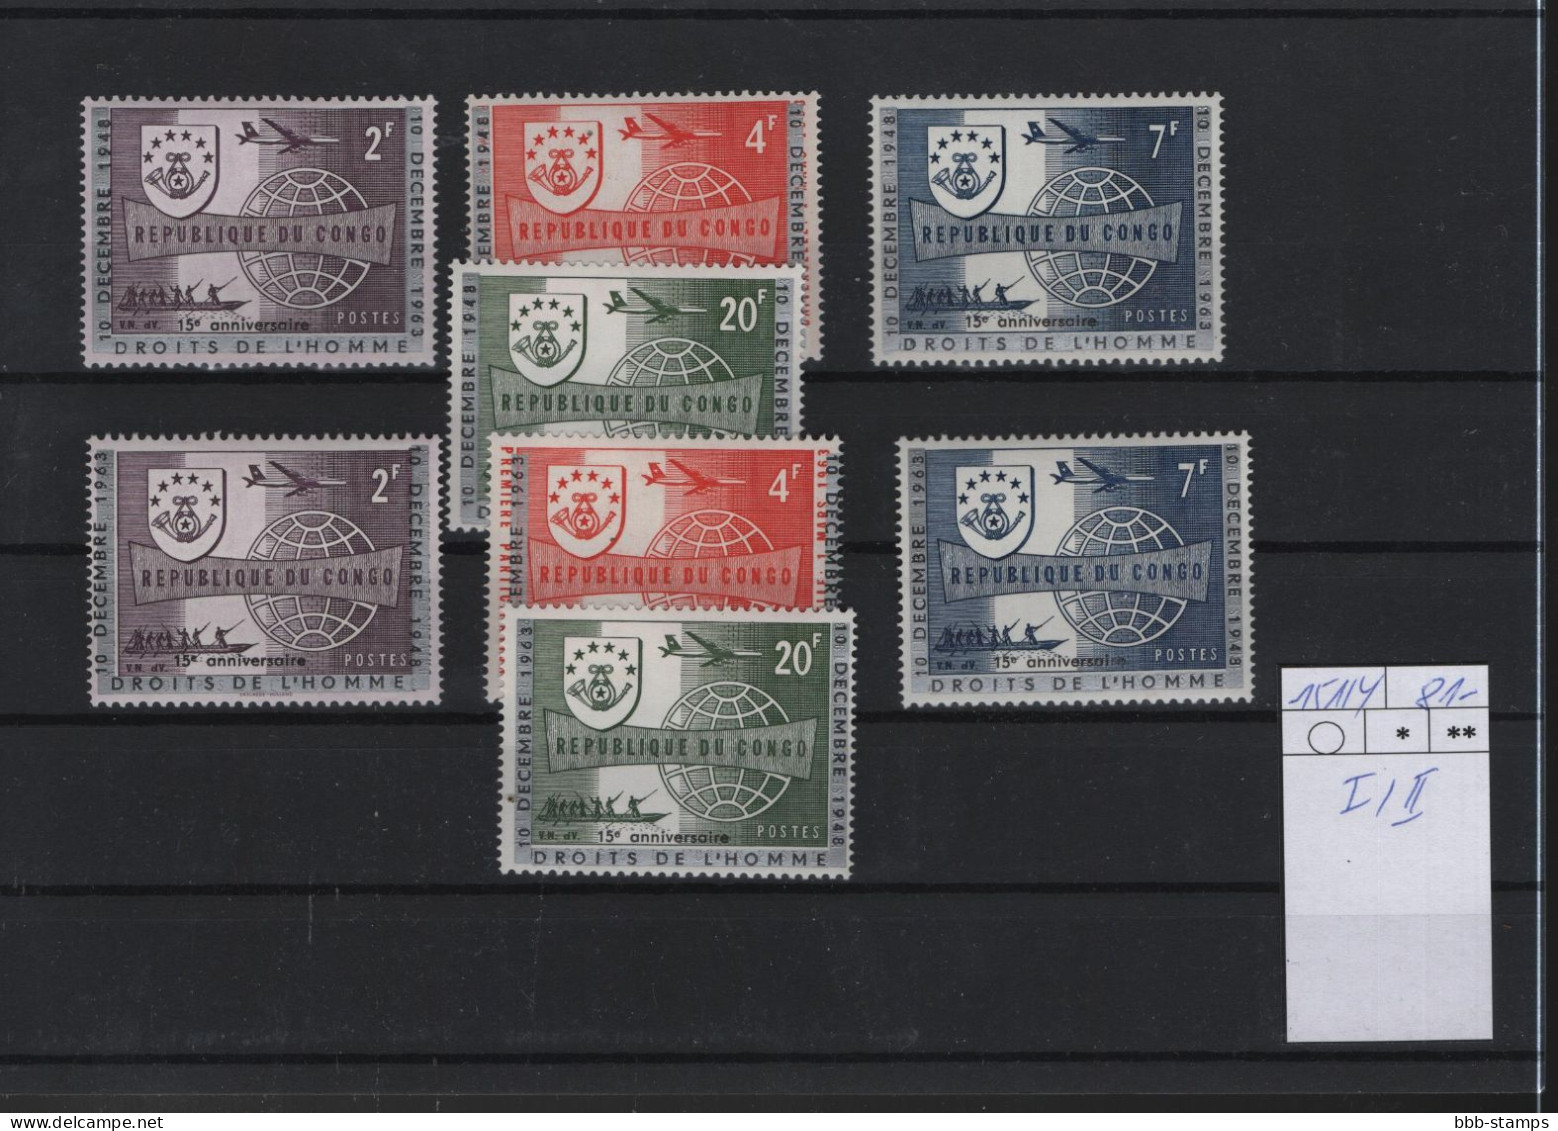 Kongo Kinshasa Michel Cat.No. Mnh/**  151/154 I/II - Unused Stamps